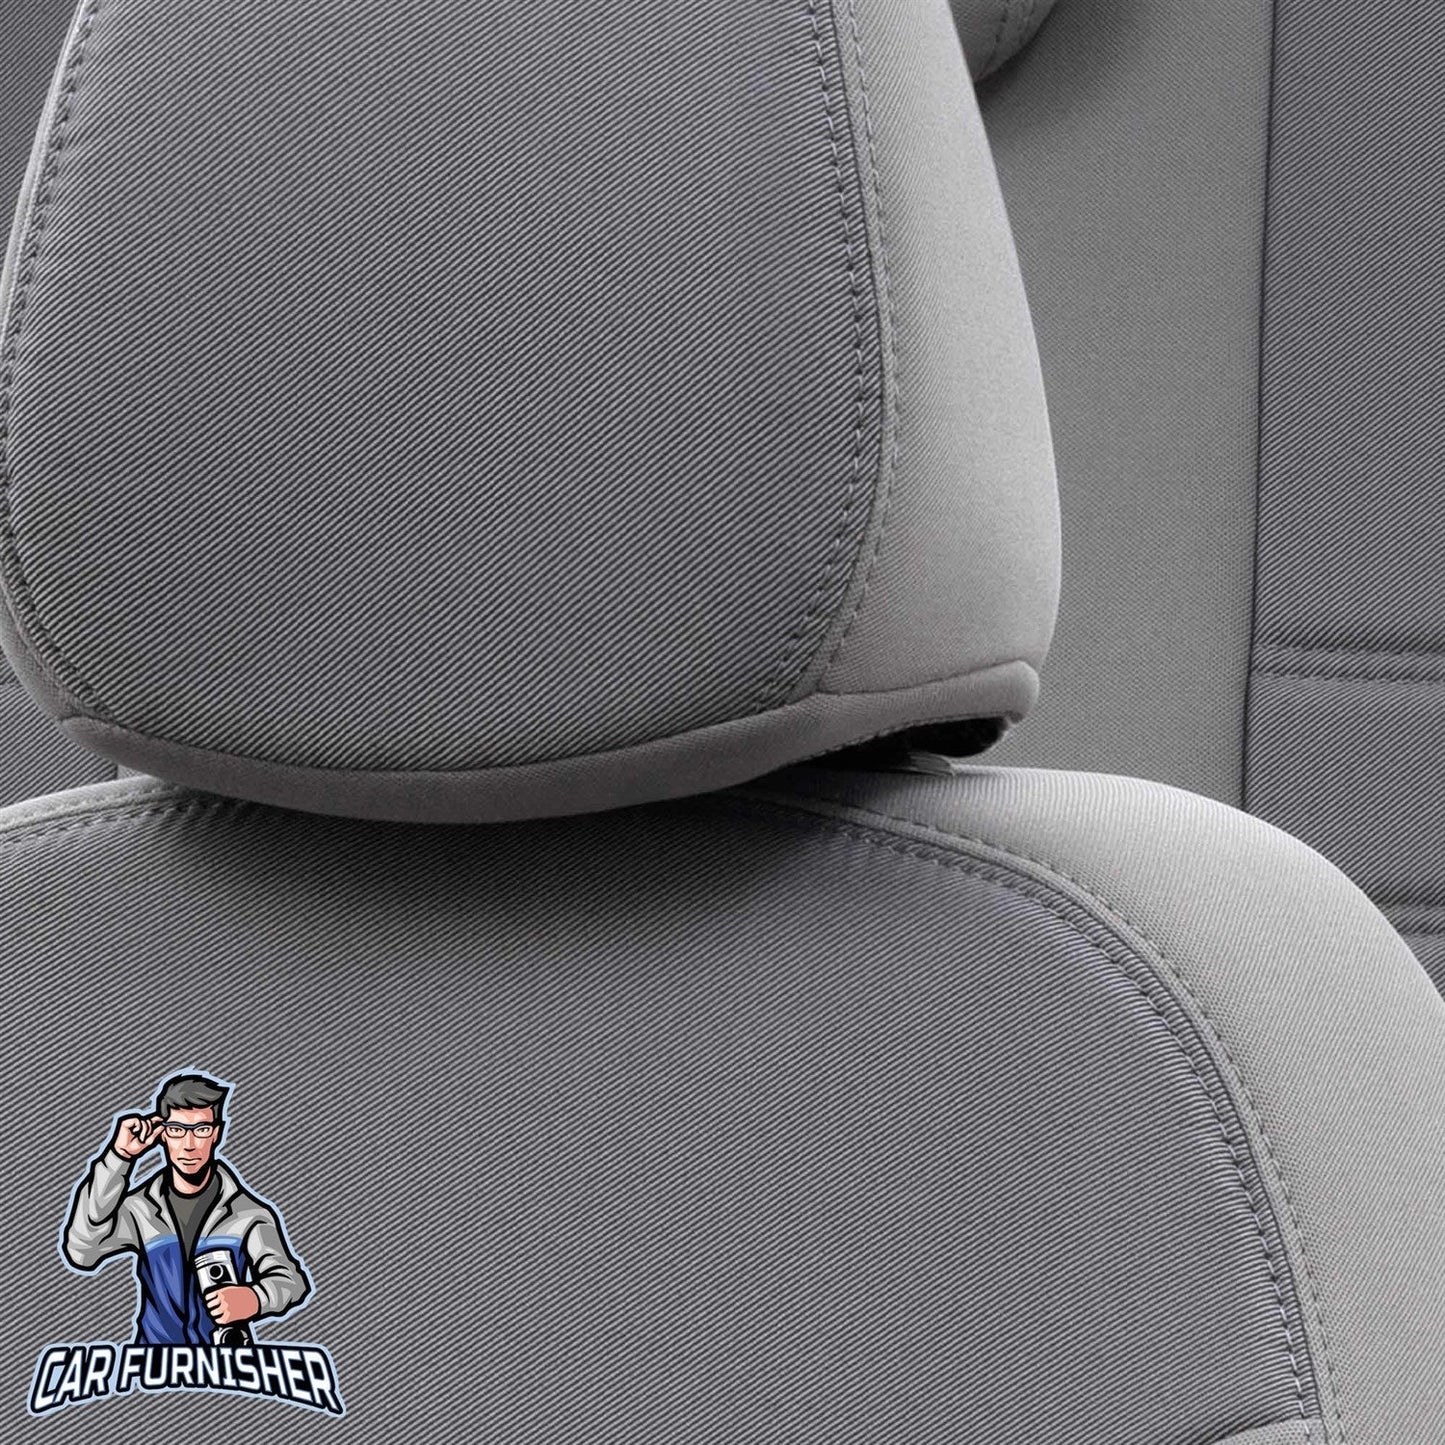 Opel Antara Seat Covers Original Jacquard Design Gray Jacquard Fabric